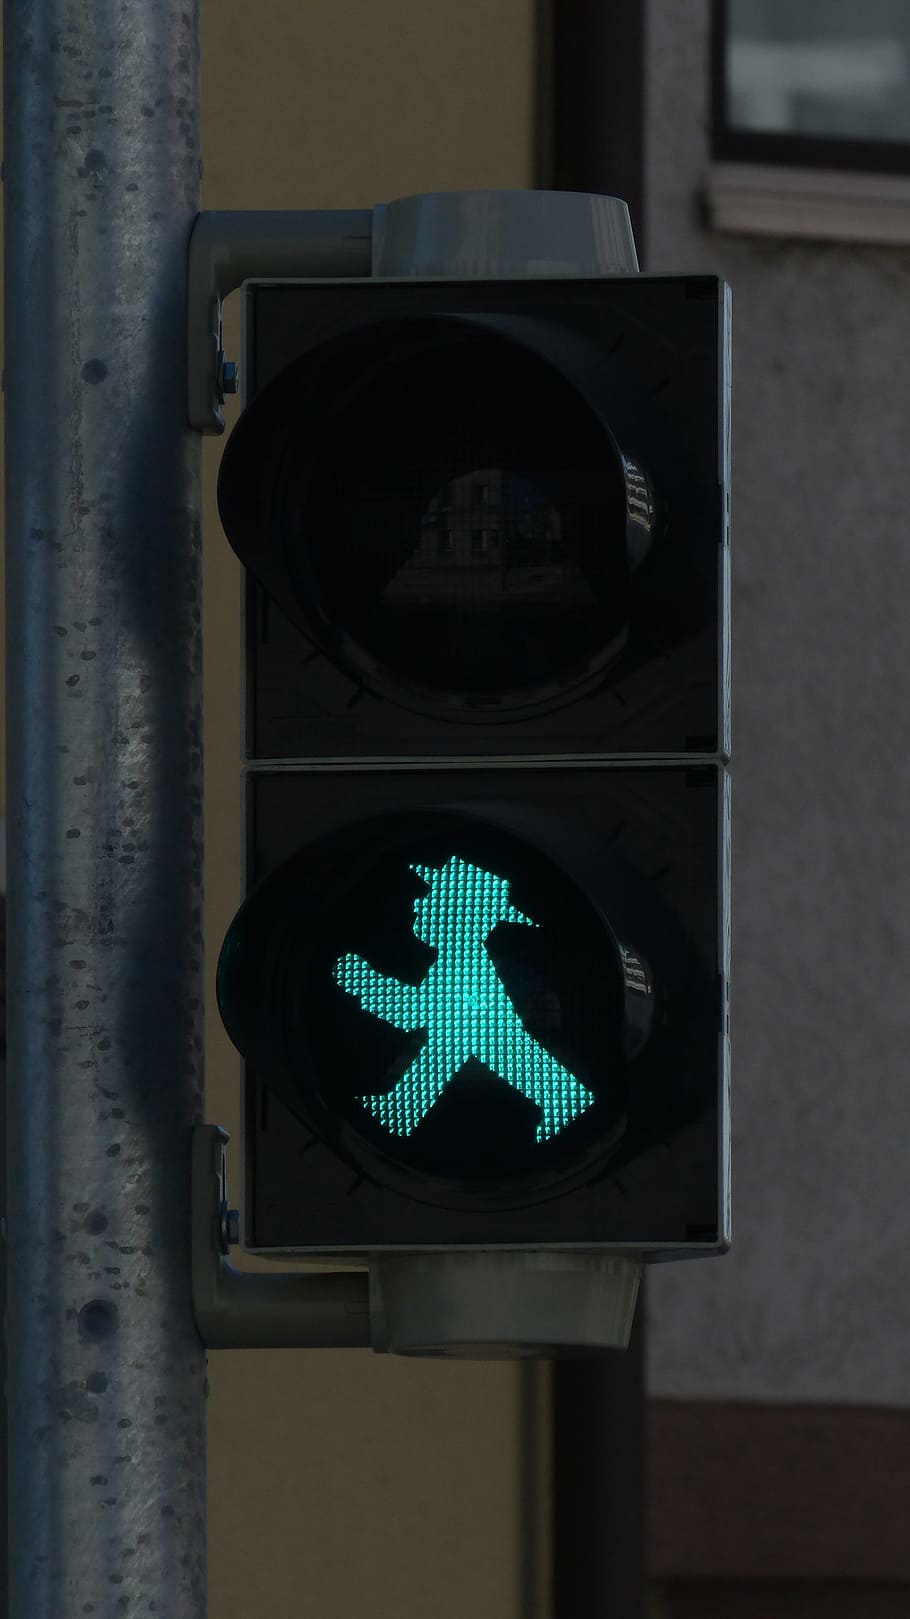 sedikit, hijau, manusia, Manusia Hijau Kecil, Lampu Lalu Lintas, jembatan, sinyal lalu lintas, laki-laki, sinyal lampu, pejantan kaki